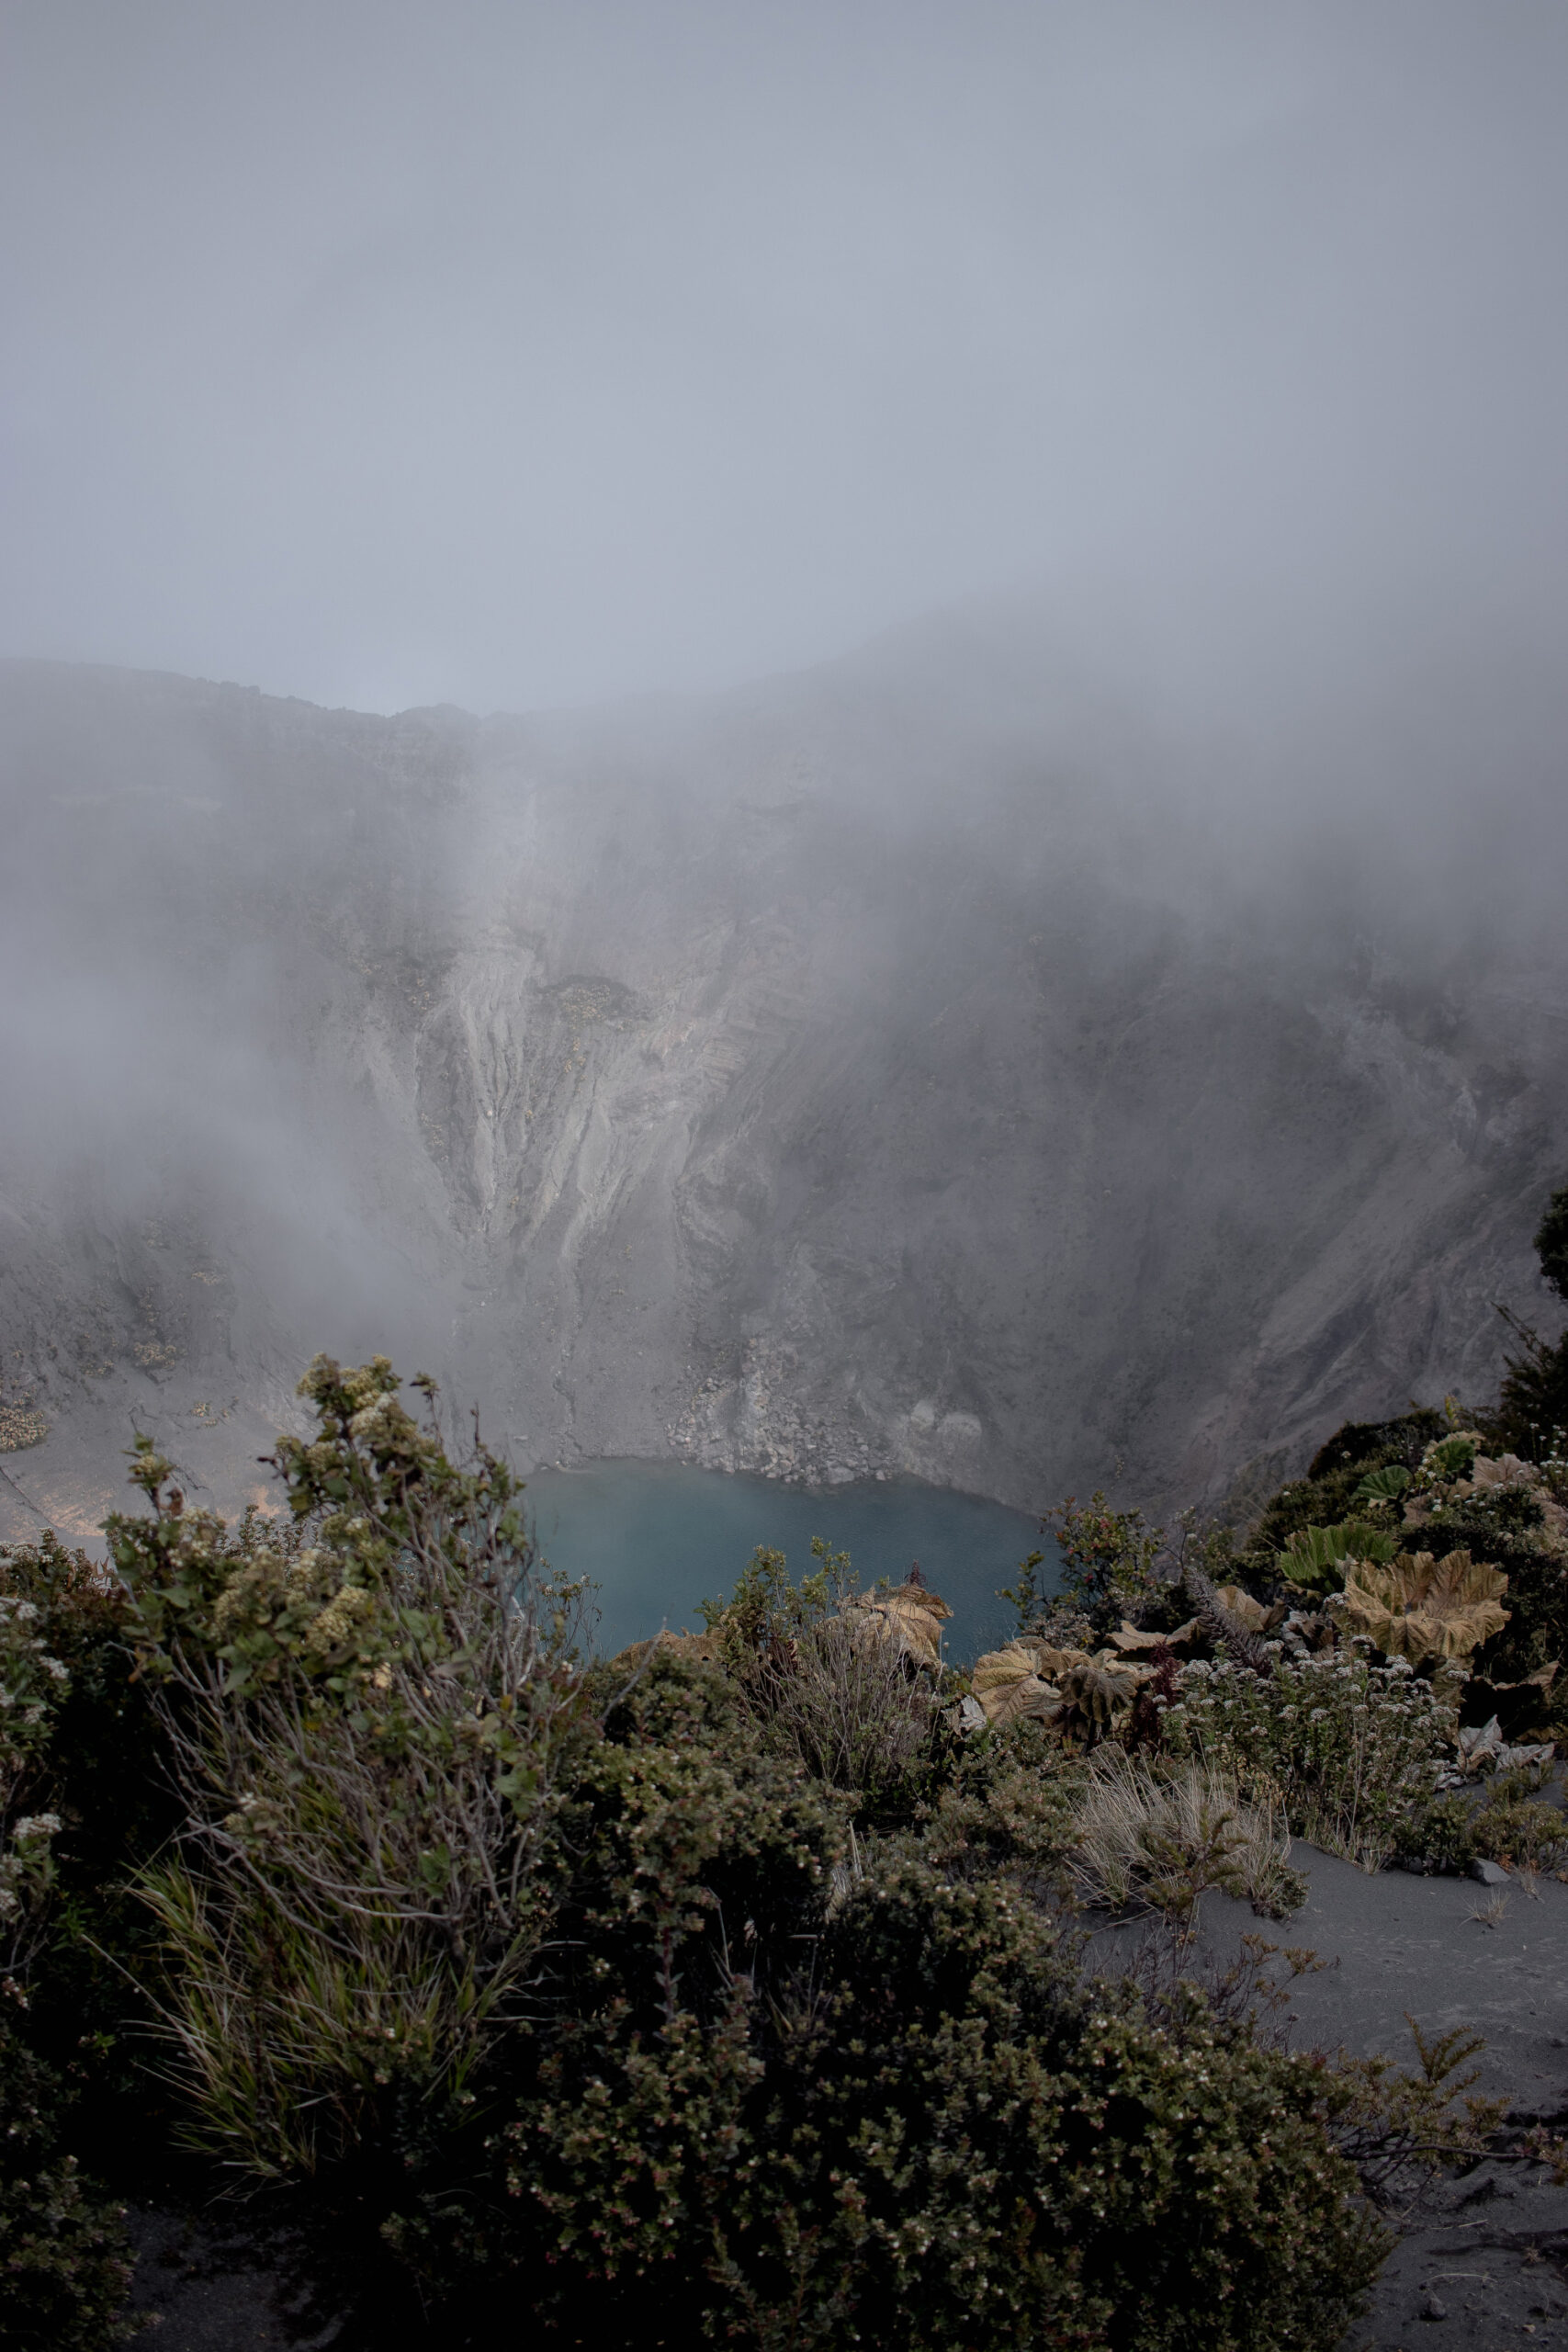 Cinder cone volcano in Irazú National Park